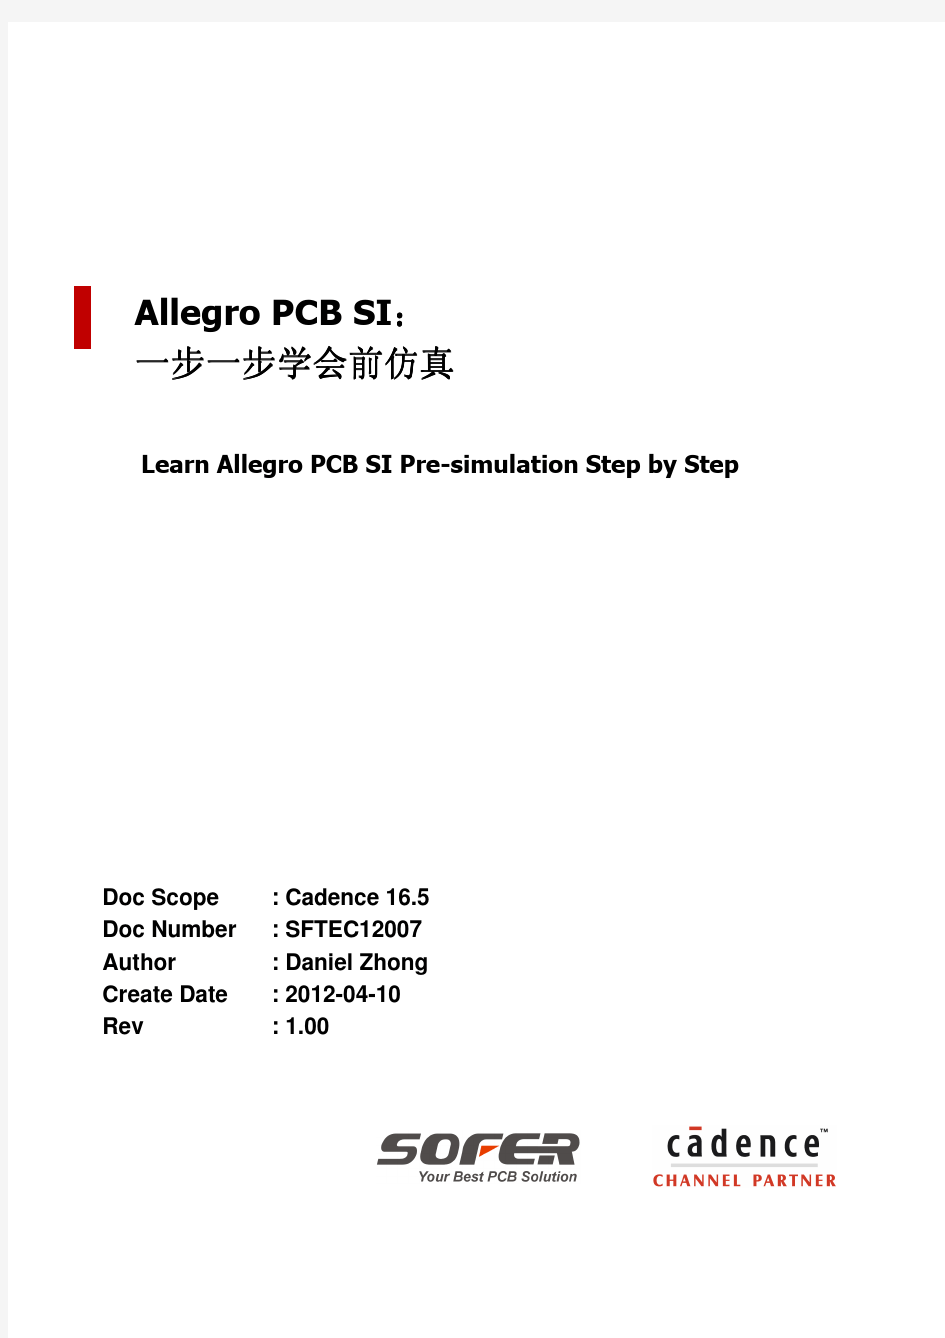 Allegro165 PCB SI 仿真流程